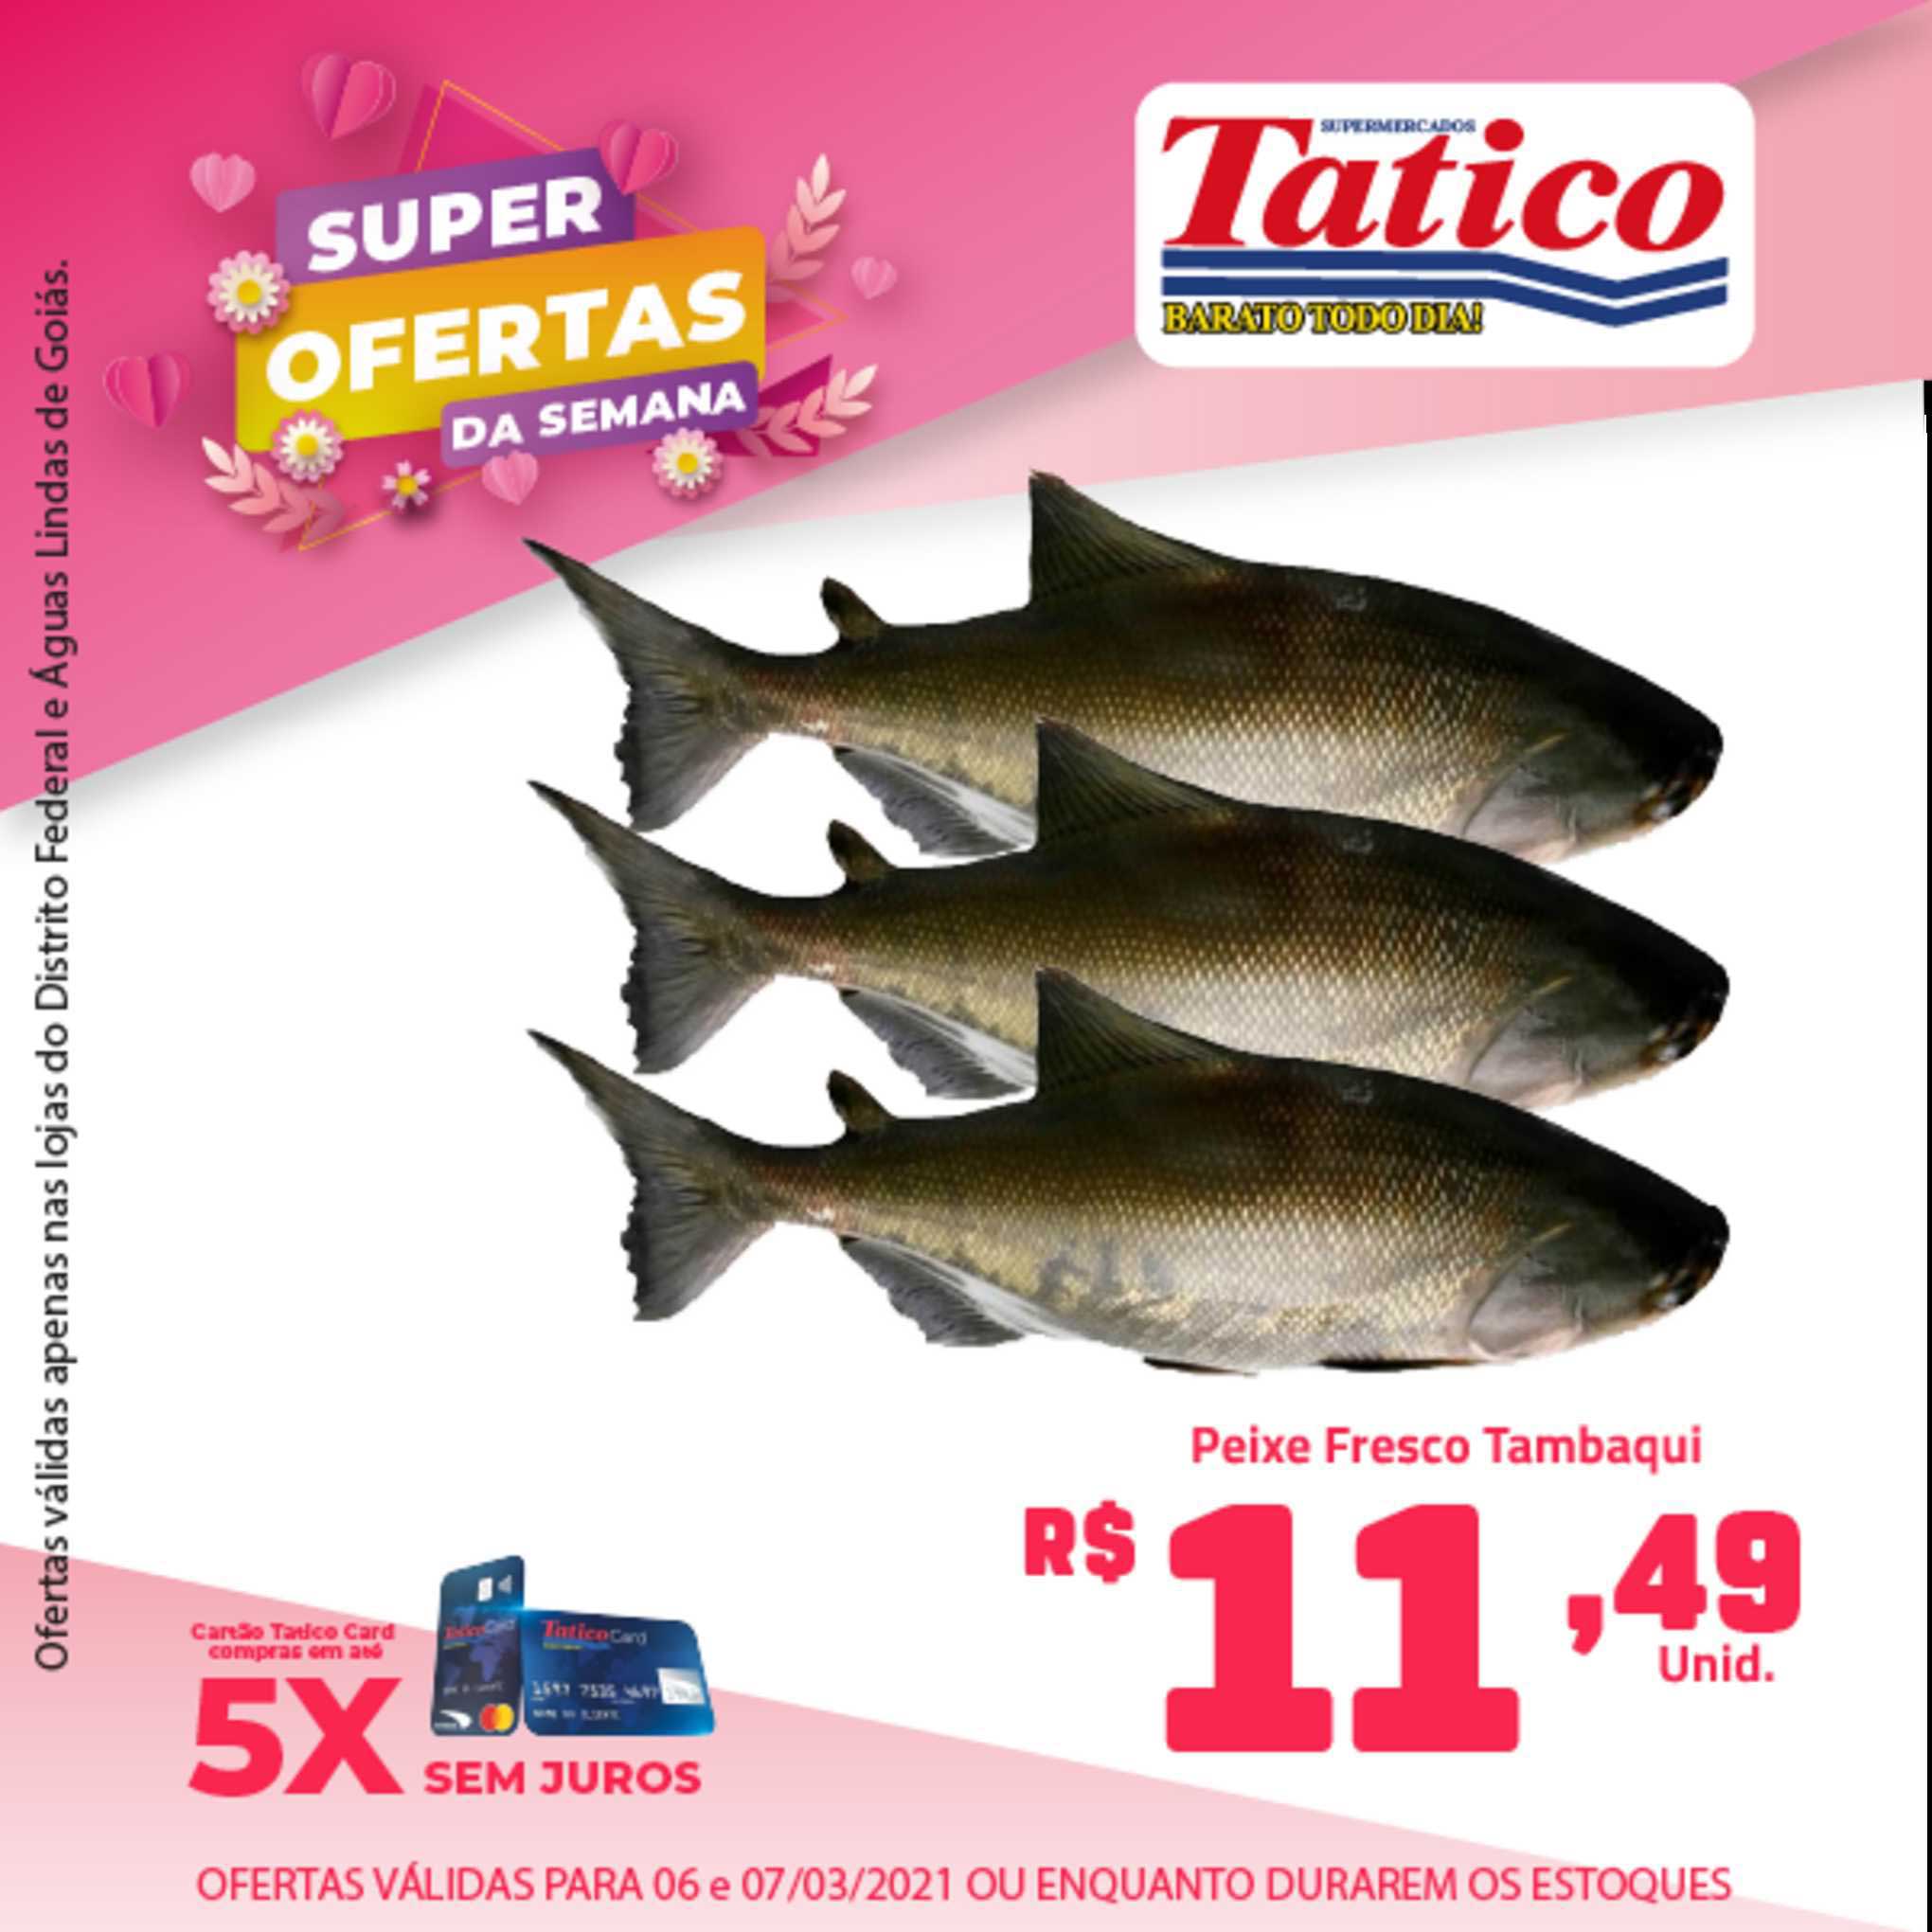 Goionews - Mercado Pontual tem ofertas de peixes - CONFIRA